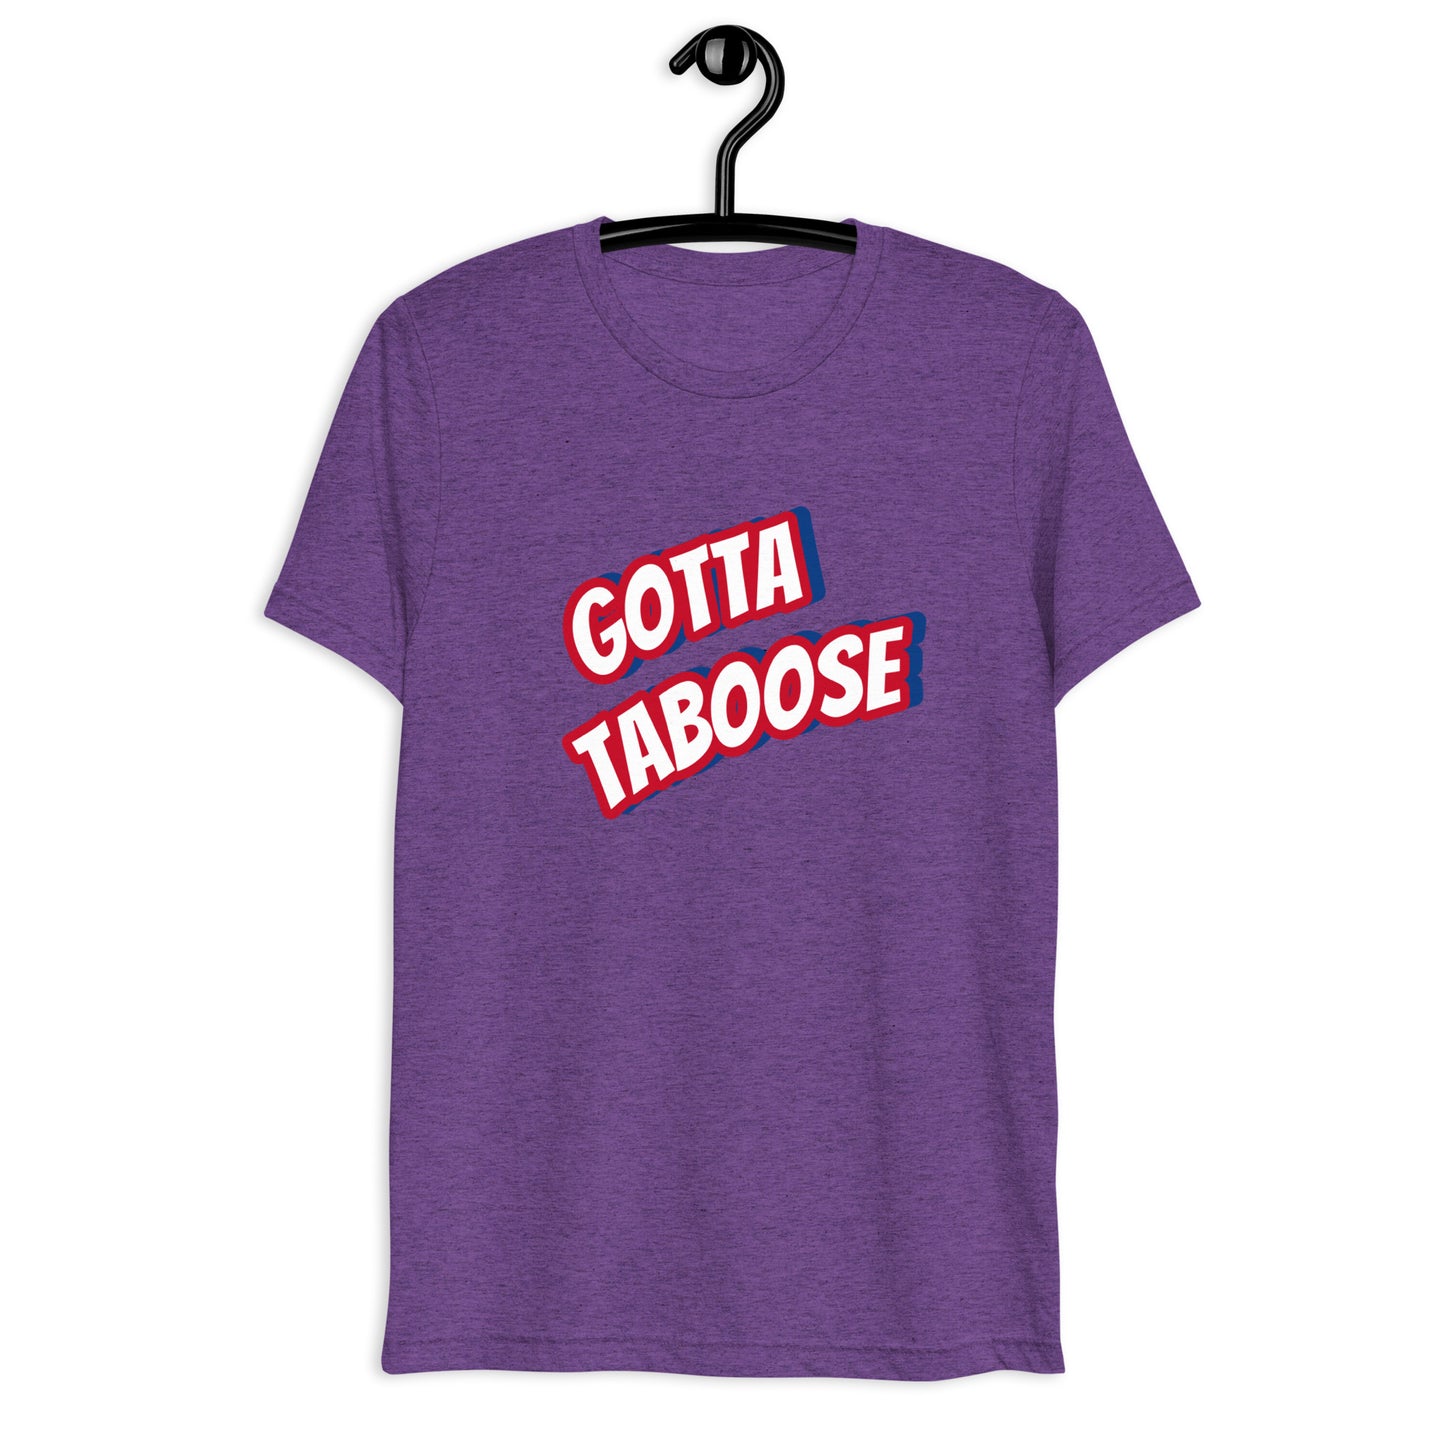 Gotta TABoose, Gotta TABoose tri-blend tee